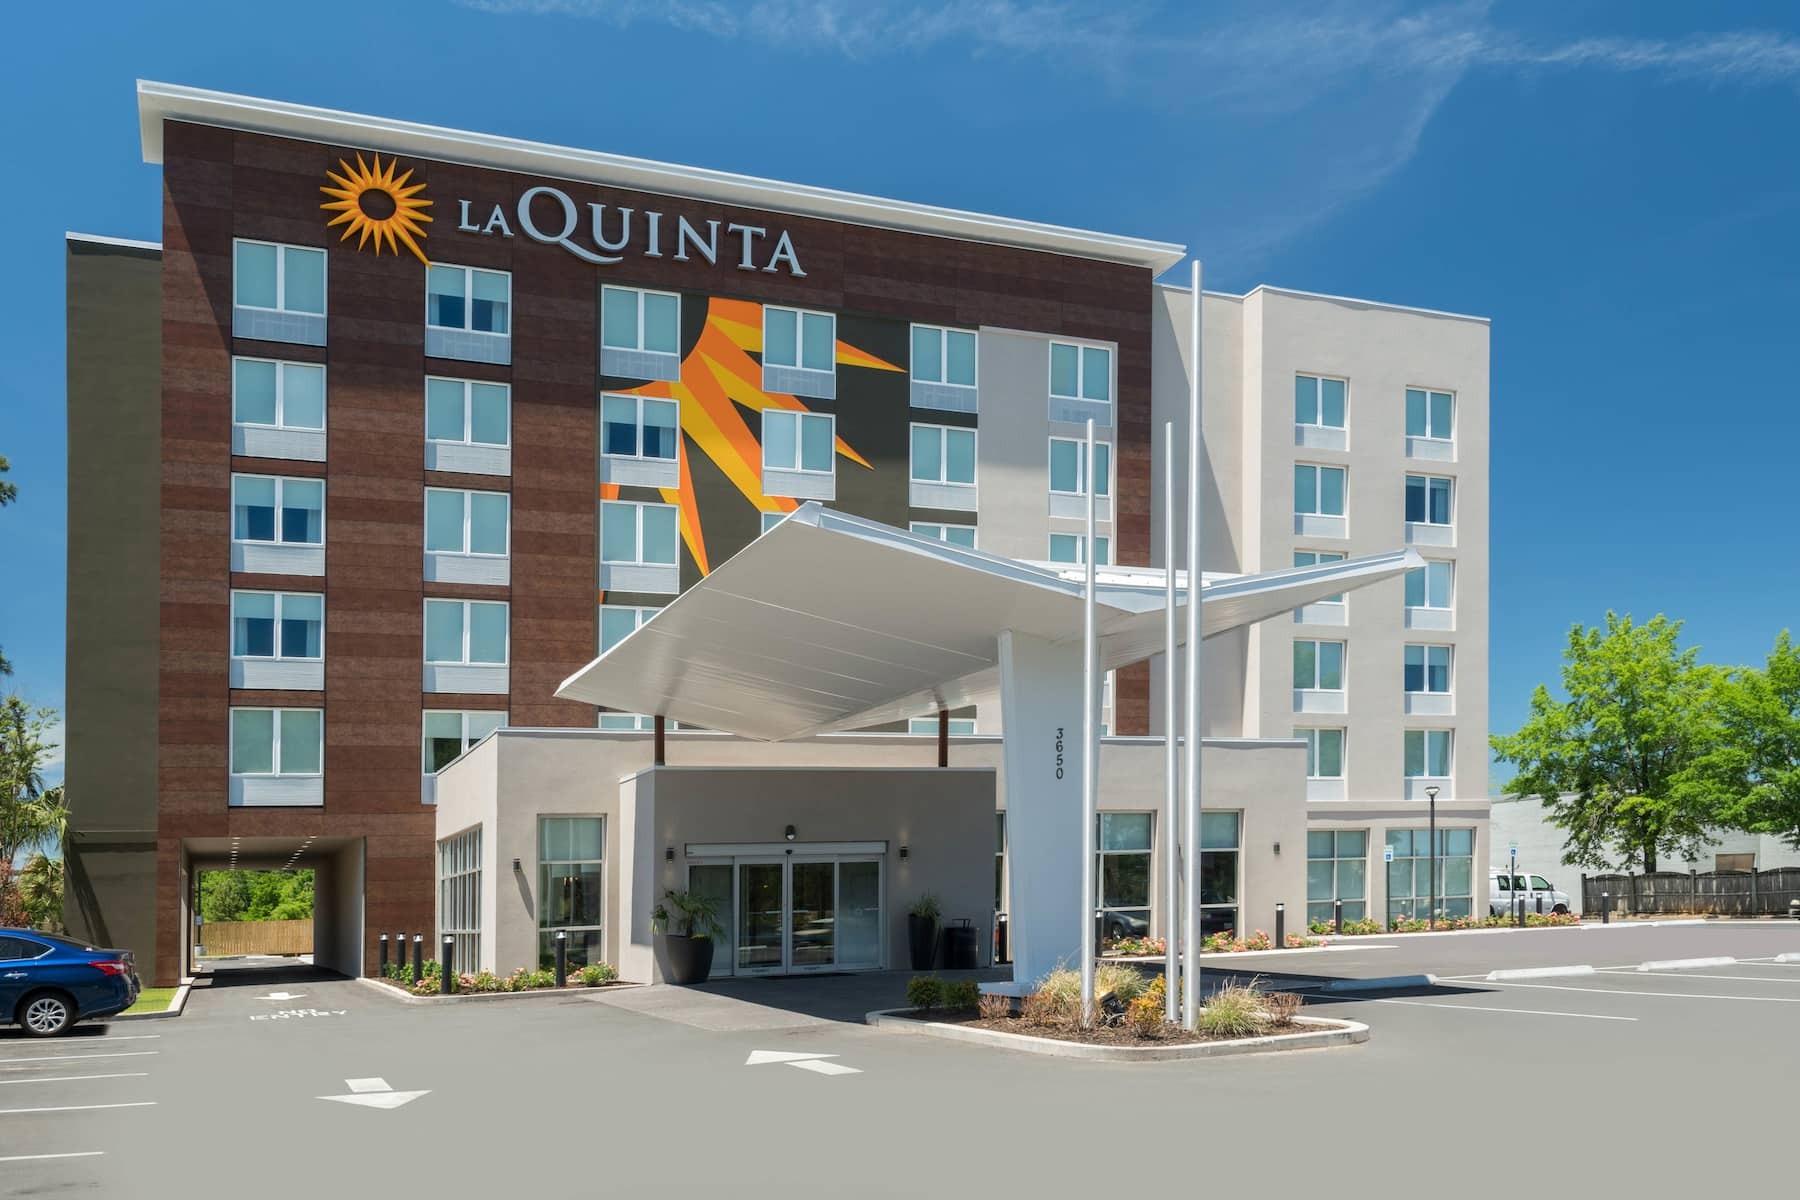 Photo of La Quinta Inn & Suites by Wyndham Mobile, Mobile, AL